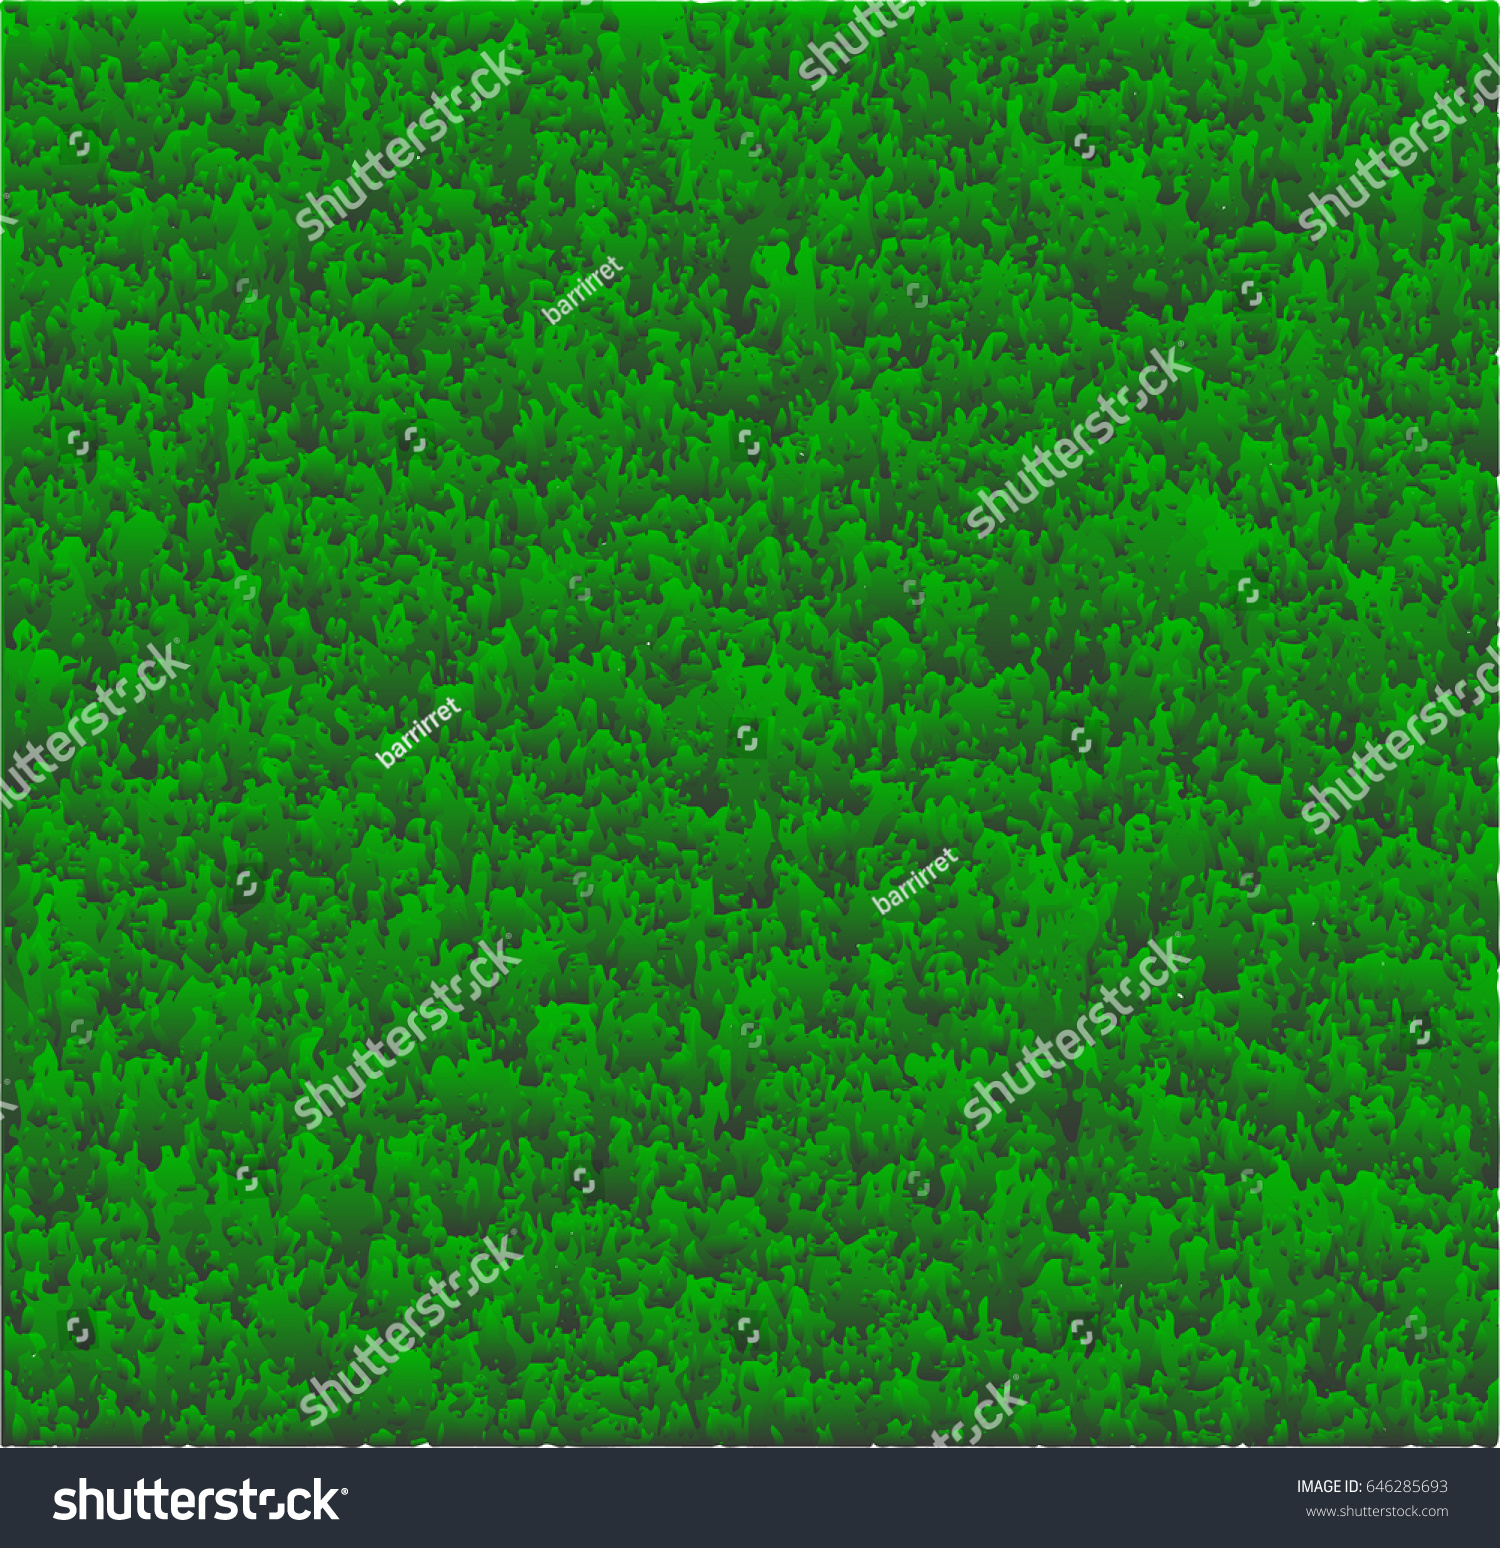 Green Seaweed Vector Background Texture Stock Vector 646285693 ...